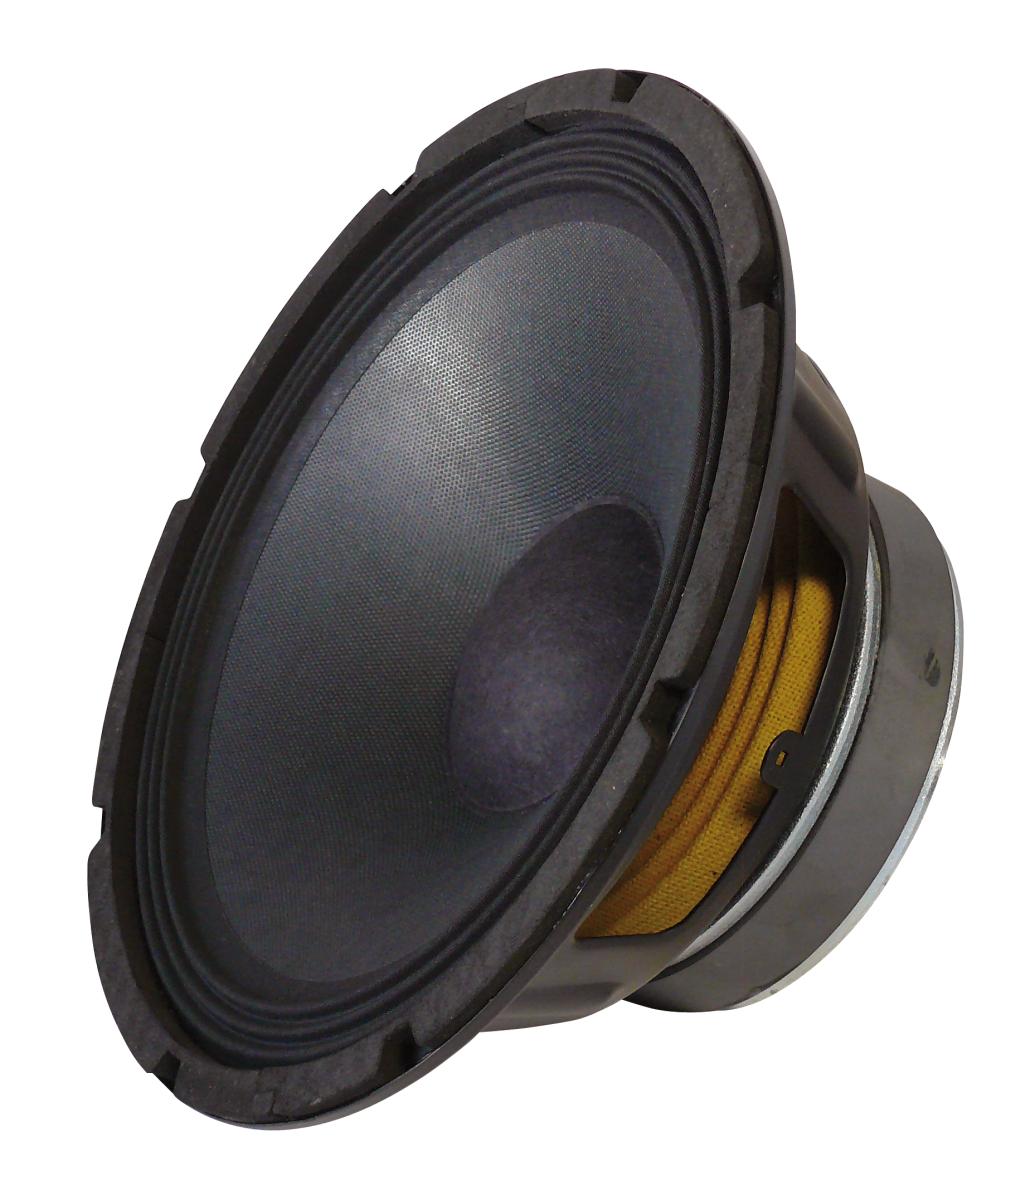 E44-Haut parleur anti magnetique 150mm 100w 55-7500hz 89db 8 ohms à 12,00 €  (Boomer)